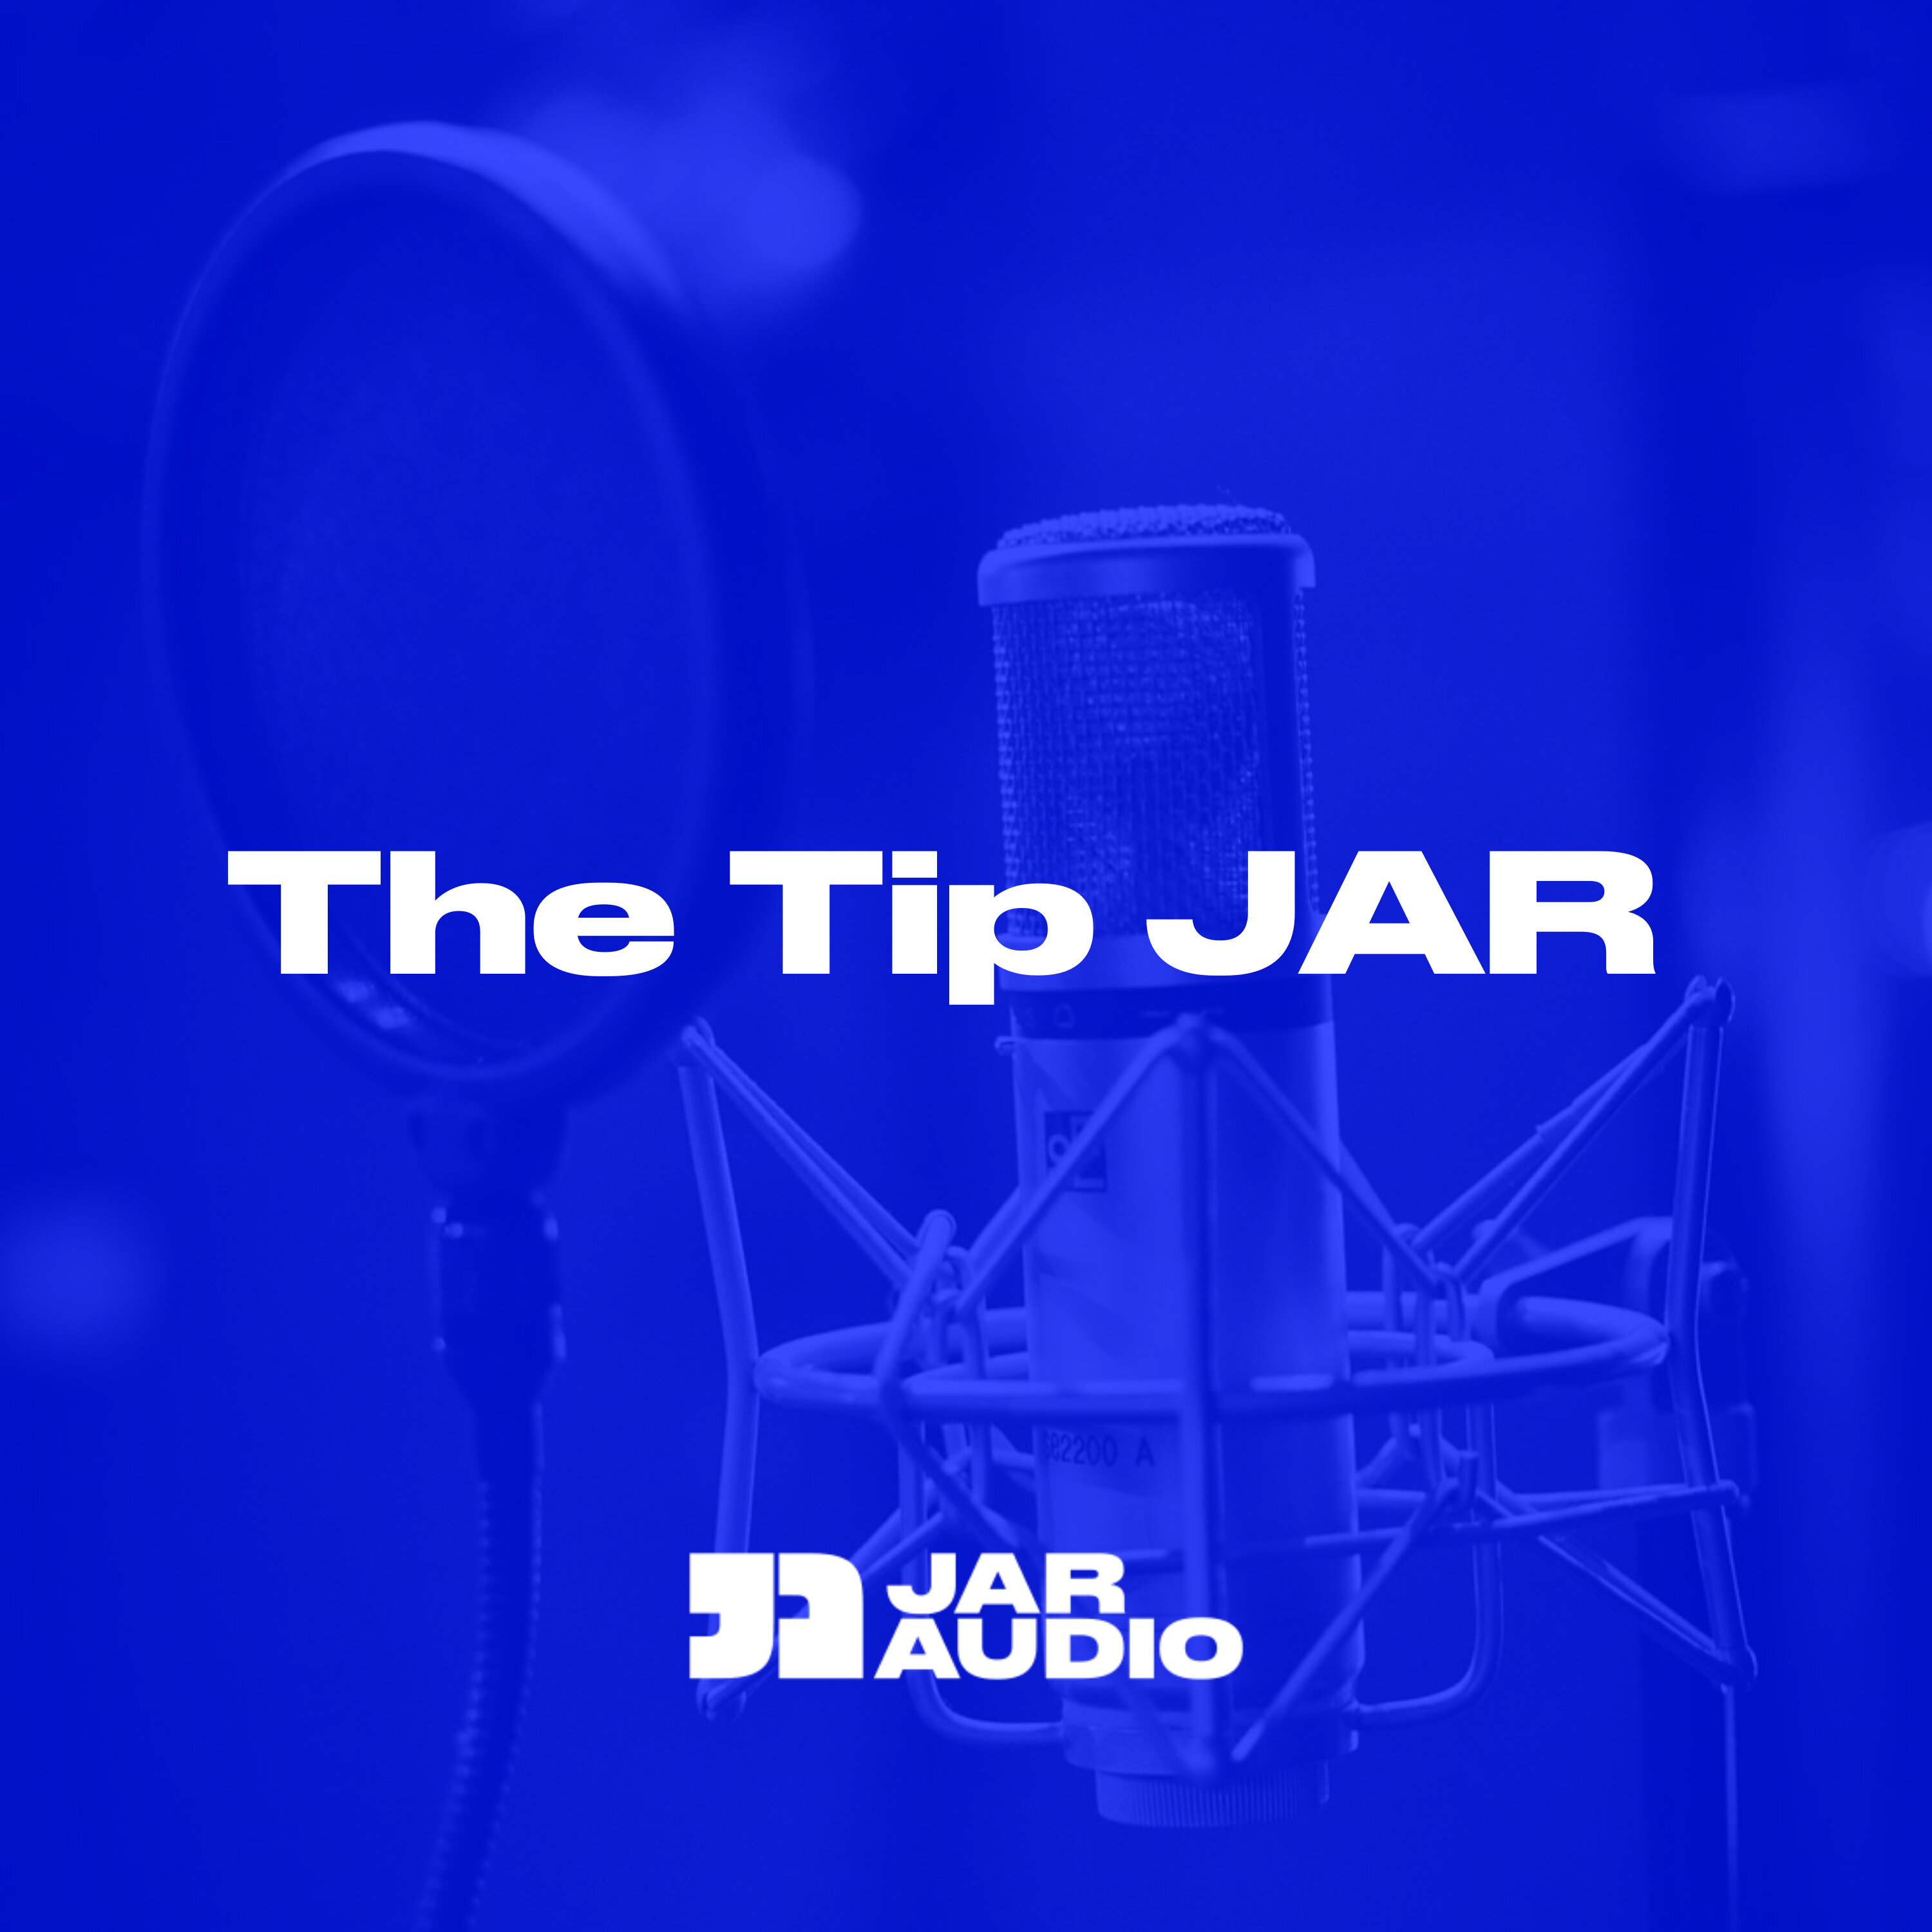 The Tip JAR